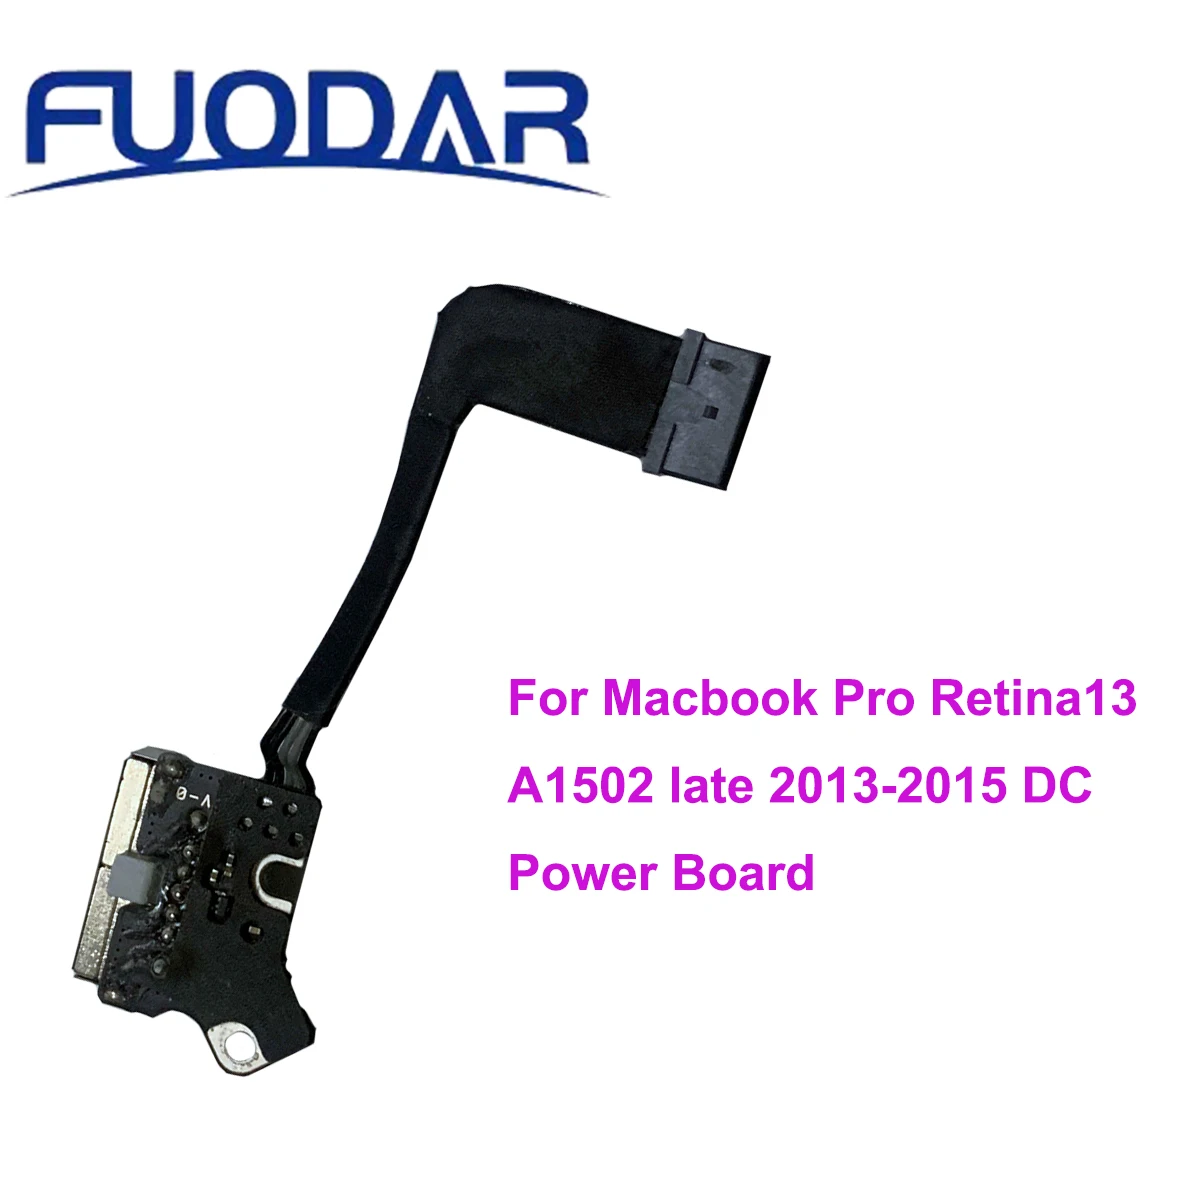 DC Jack Power Board Jack Socket 820-3584-A For Macbook Pro Retina13 A1502 late 2013-2015 DC Power Board